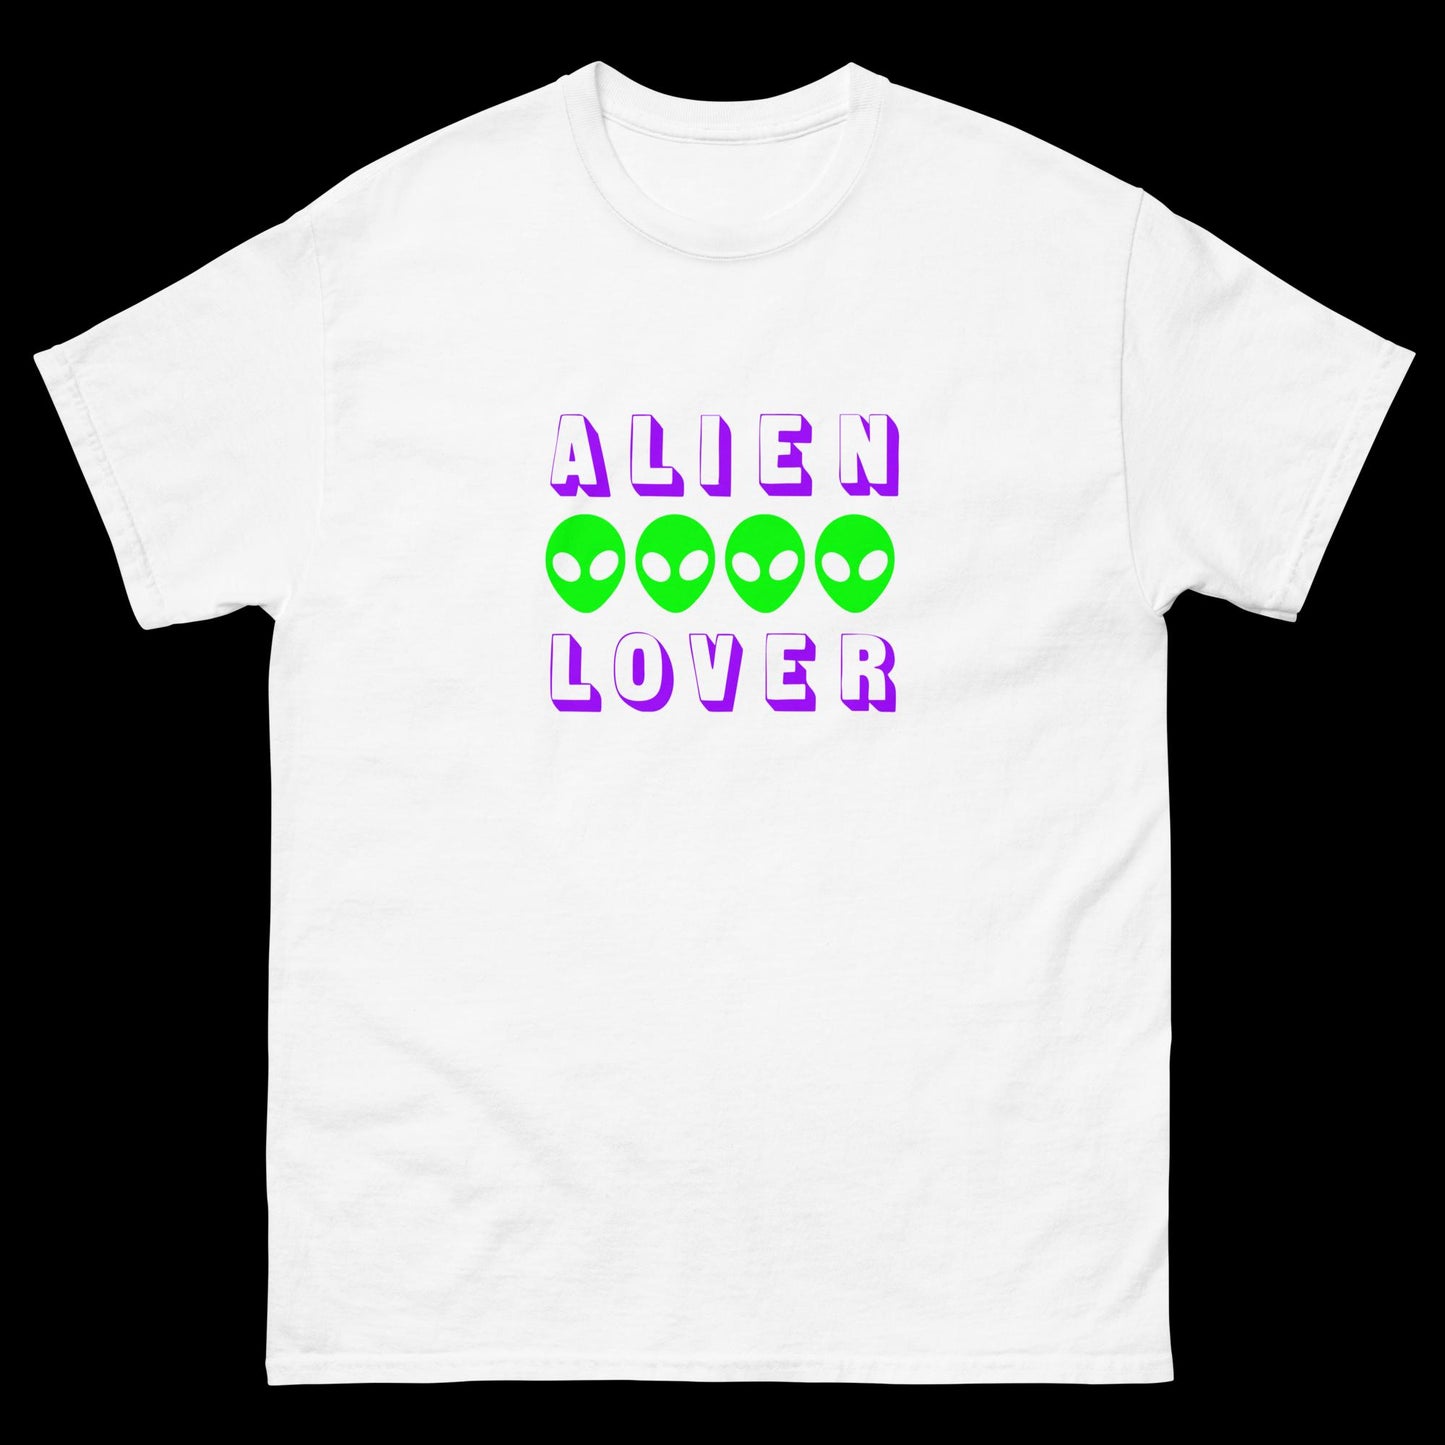 Alien Lover - Purple - Classic T-Shirt